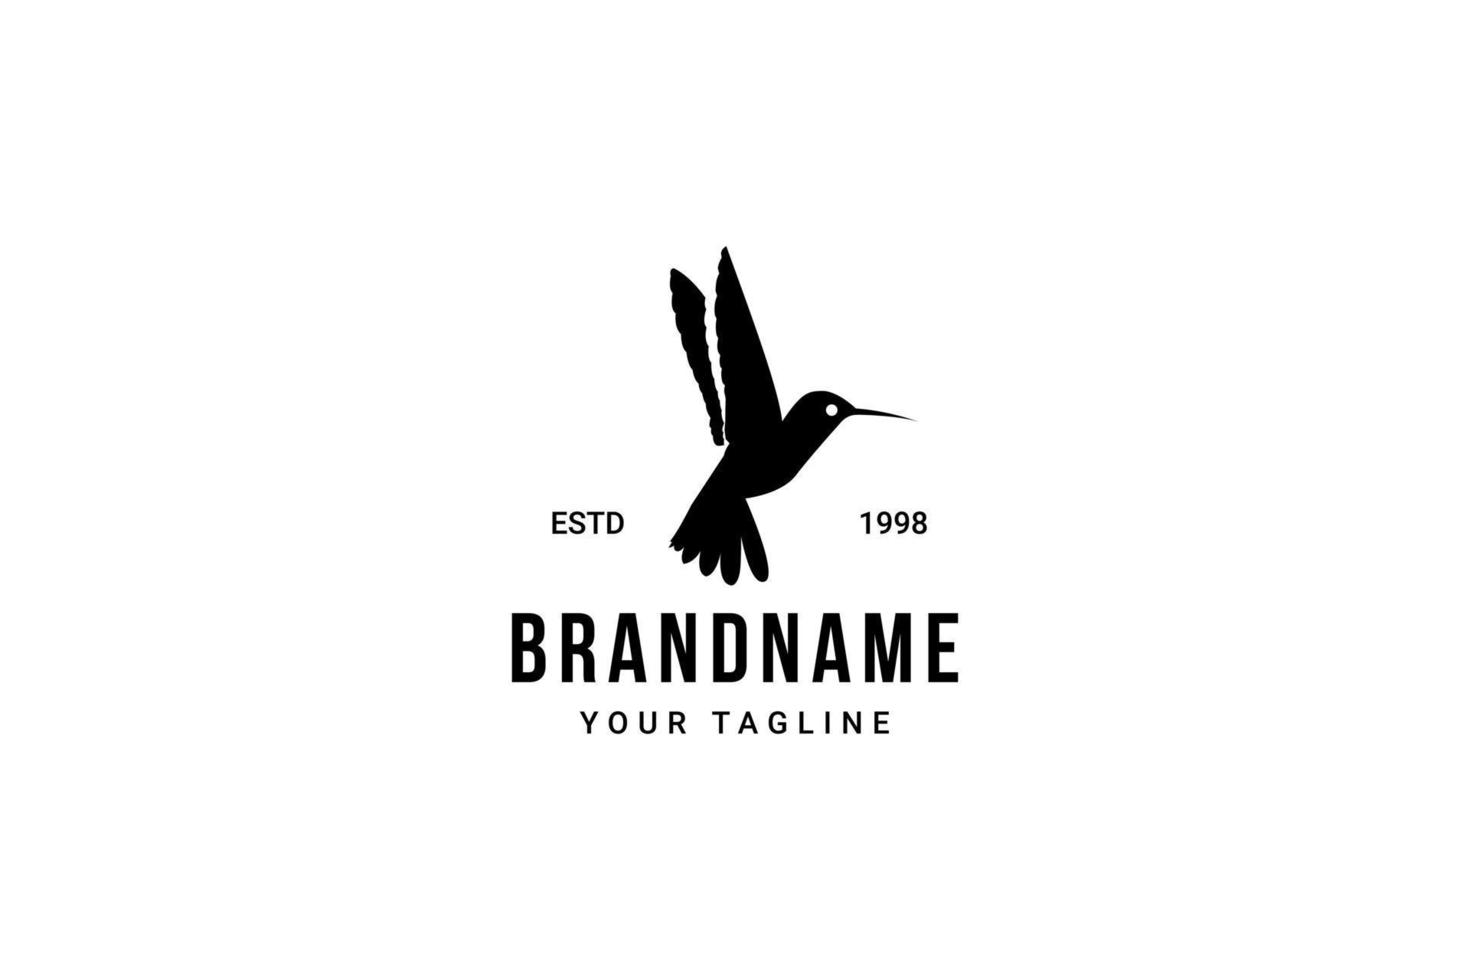 bird vintage logo vector icon illustration